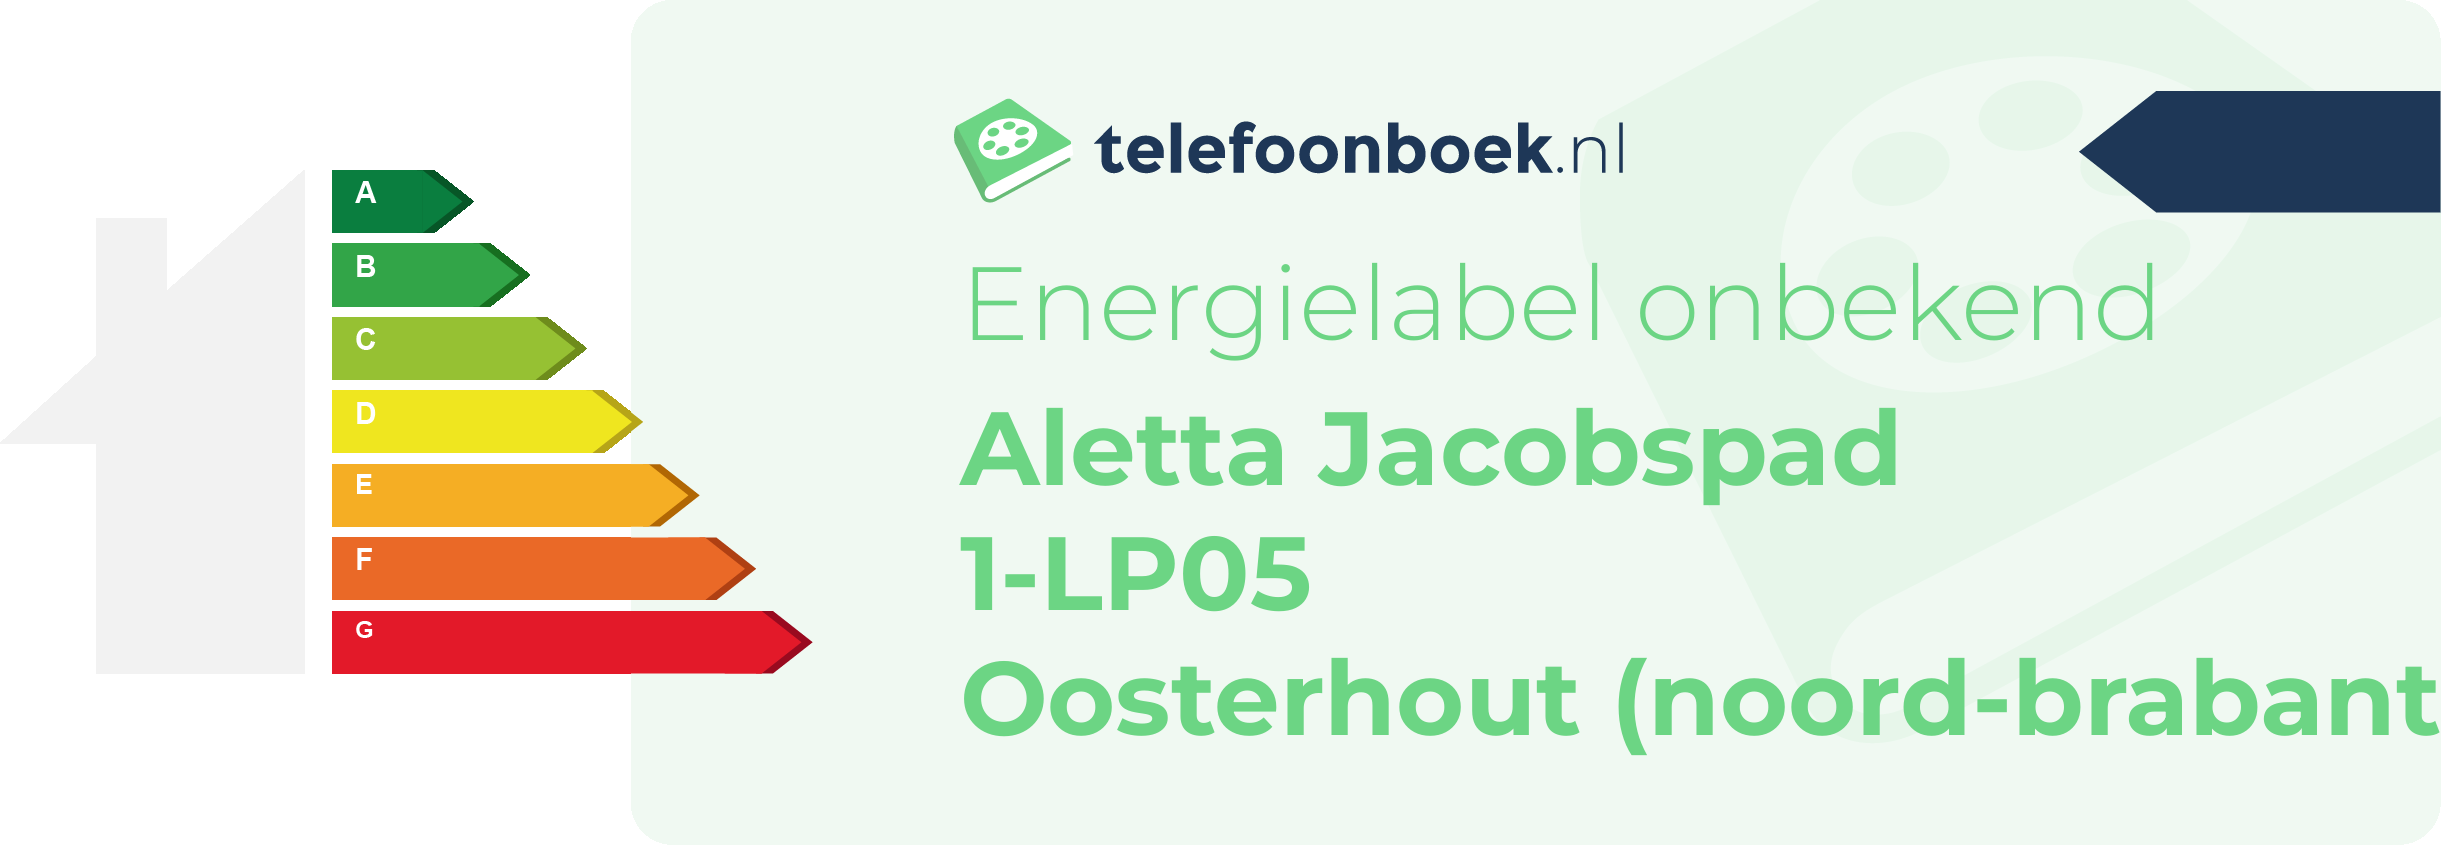 Energielabel Aletta Jacobspad 1-LP05 Oosterhout (Noord-Brabant)